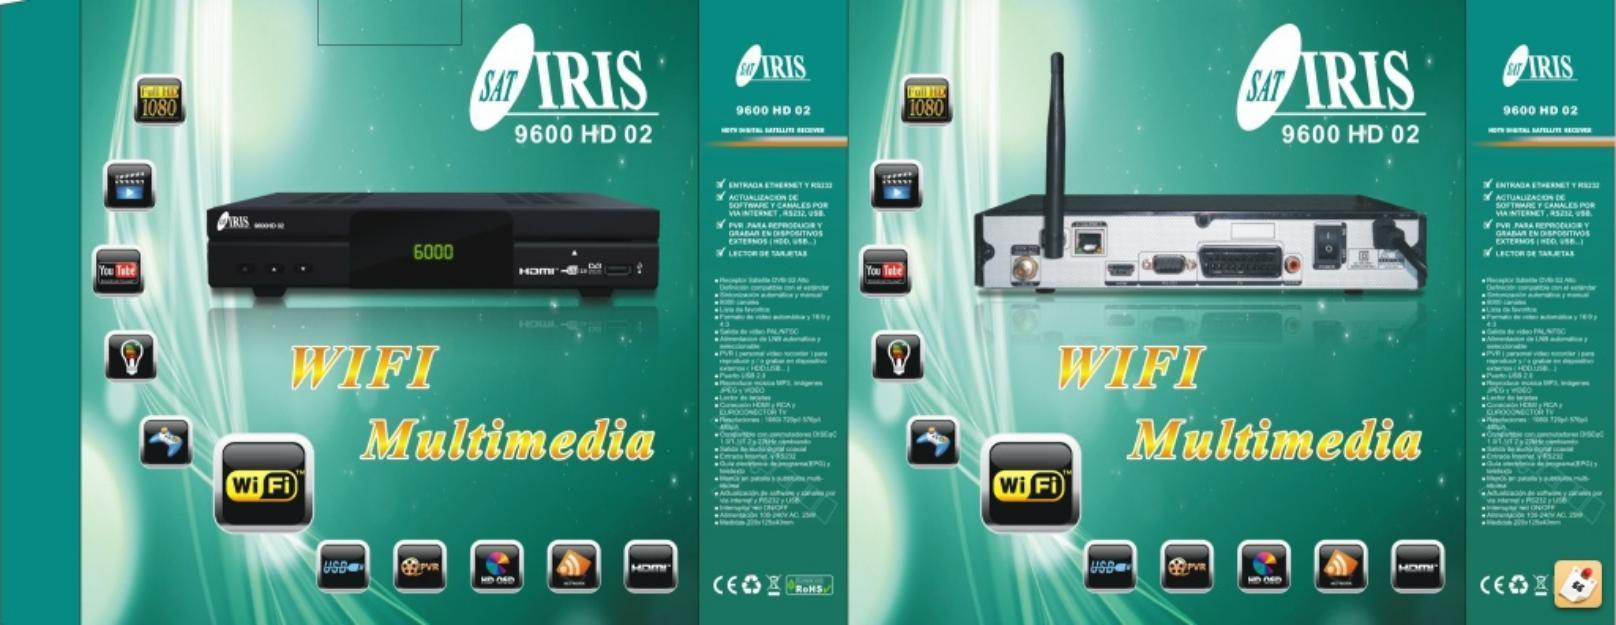 Iris 9600 hd02